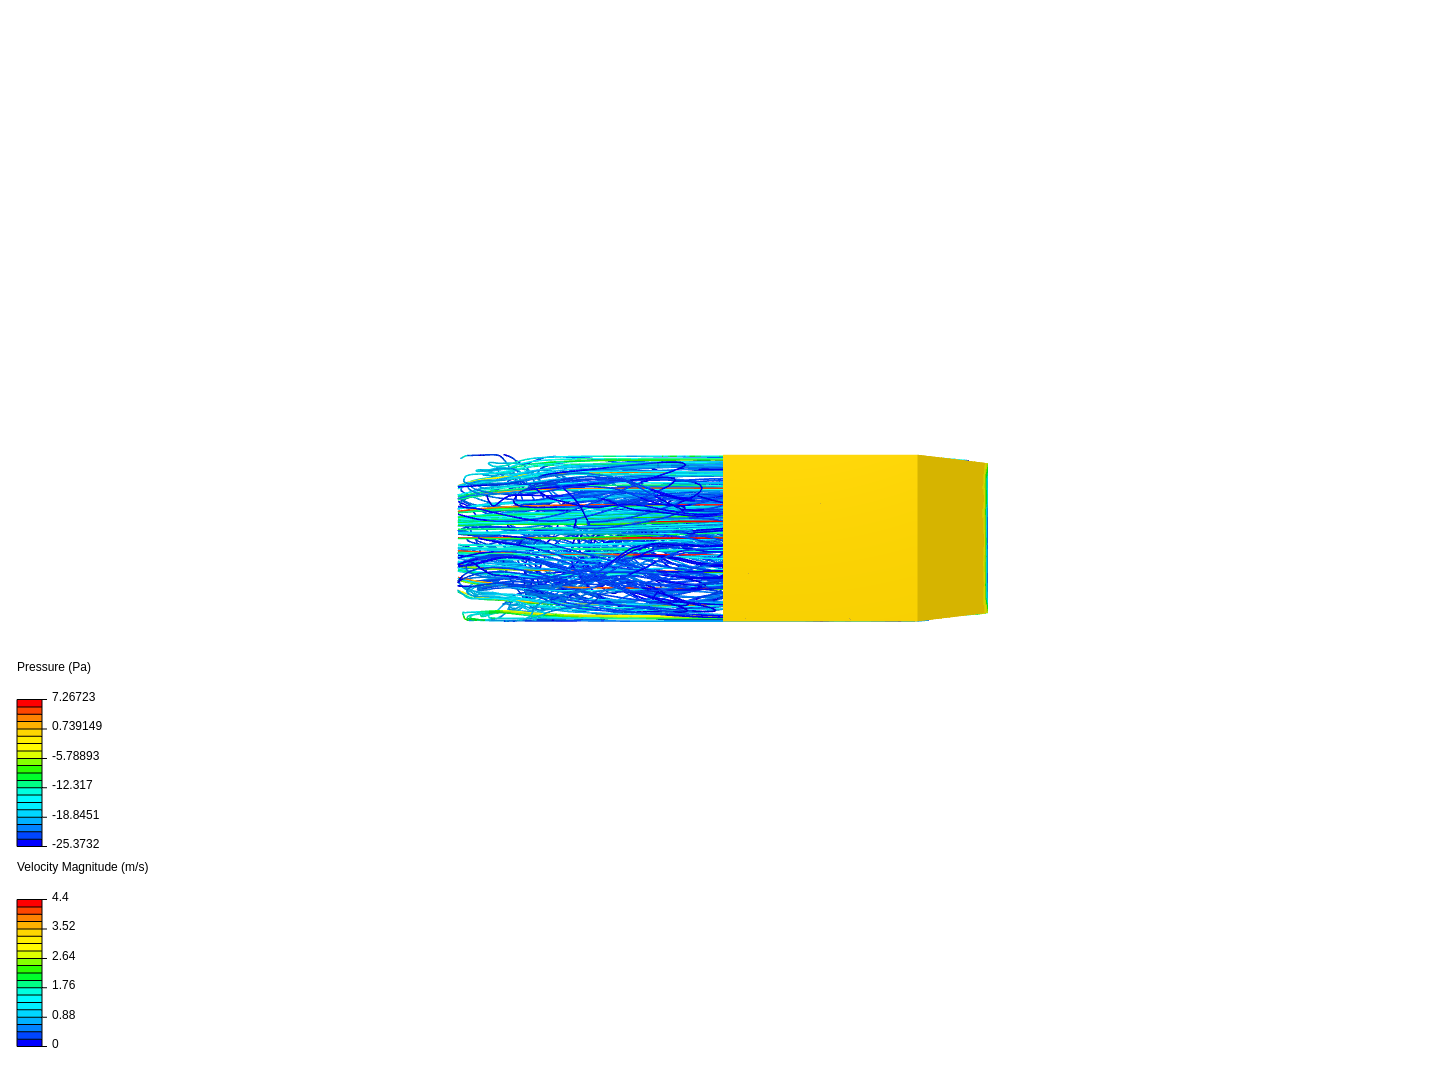 module airflow sim image